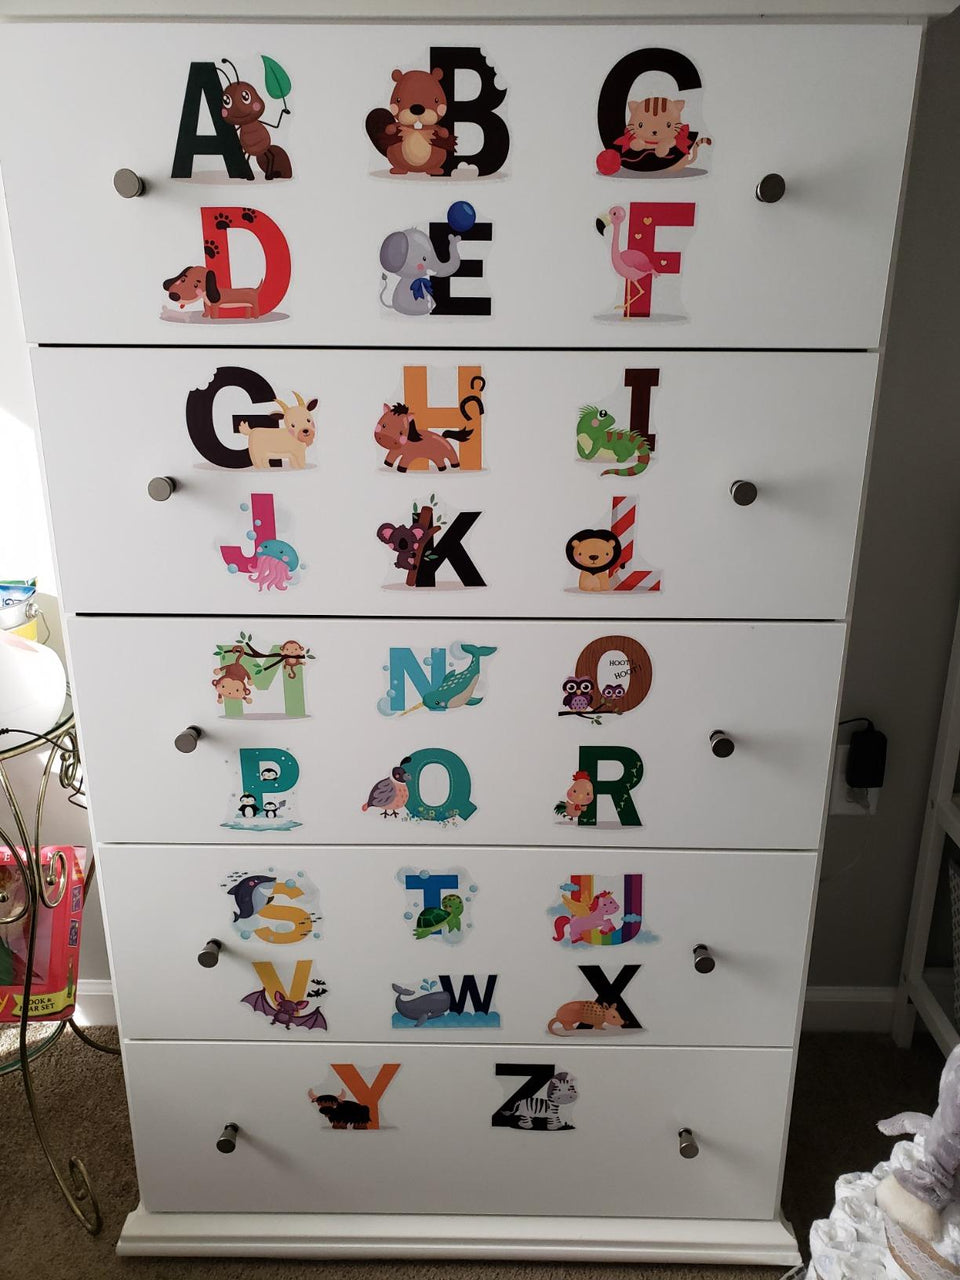 Educational Animal Alphabet Kids Wall Decals - Baby Nursery Decor Peel & Stick Decorative Baby Stickers for Playroom, Classroom Decoration